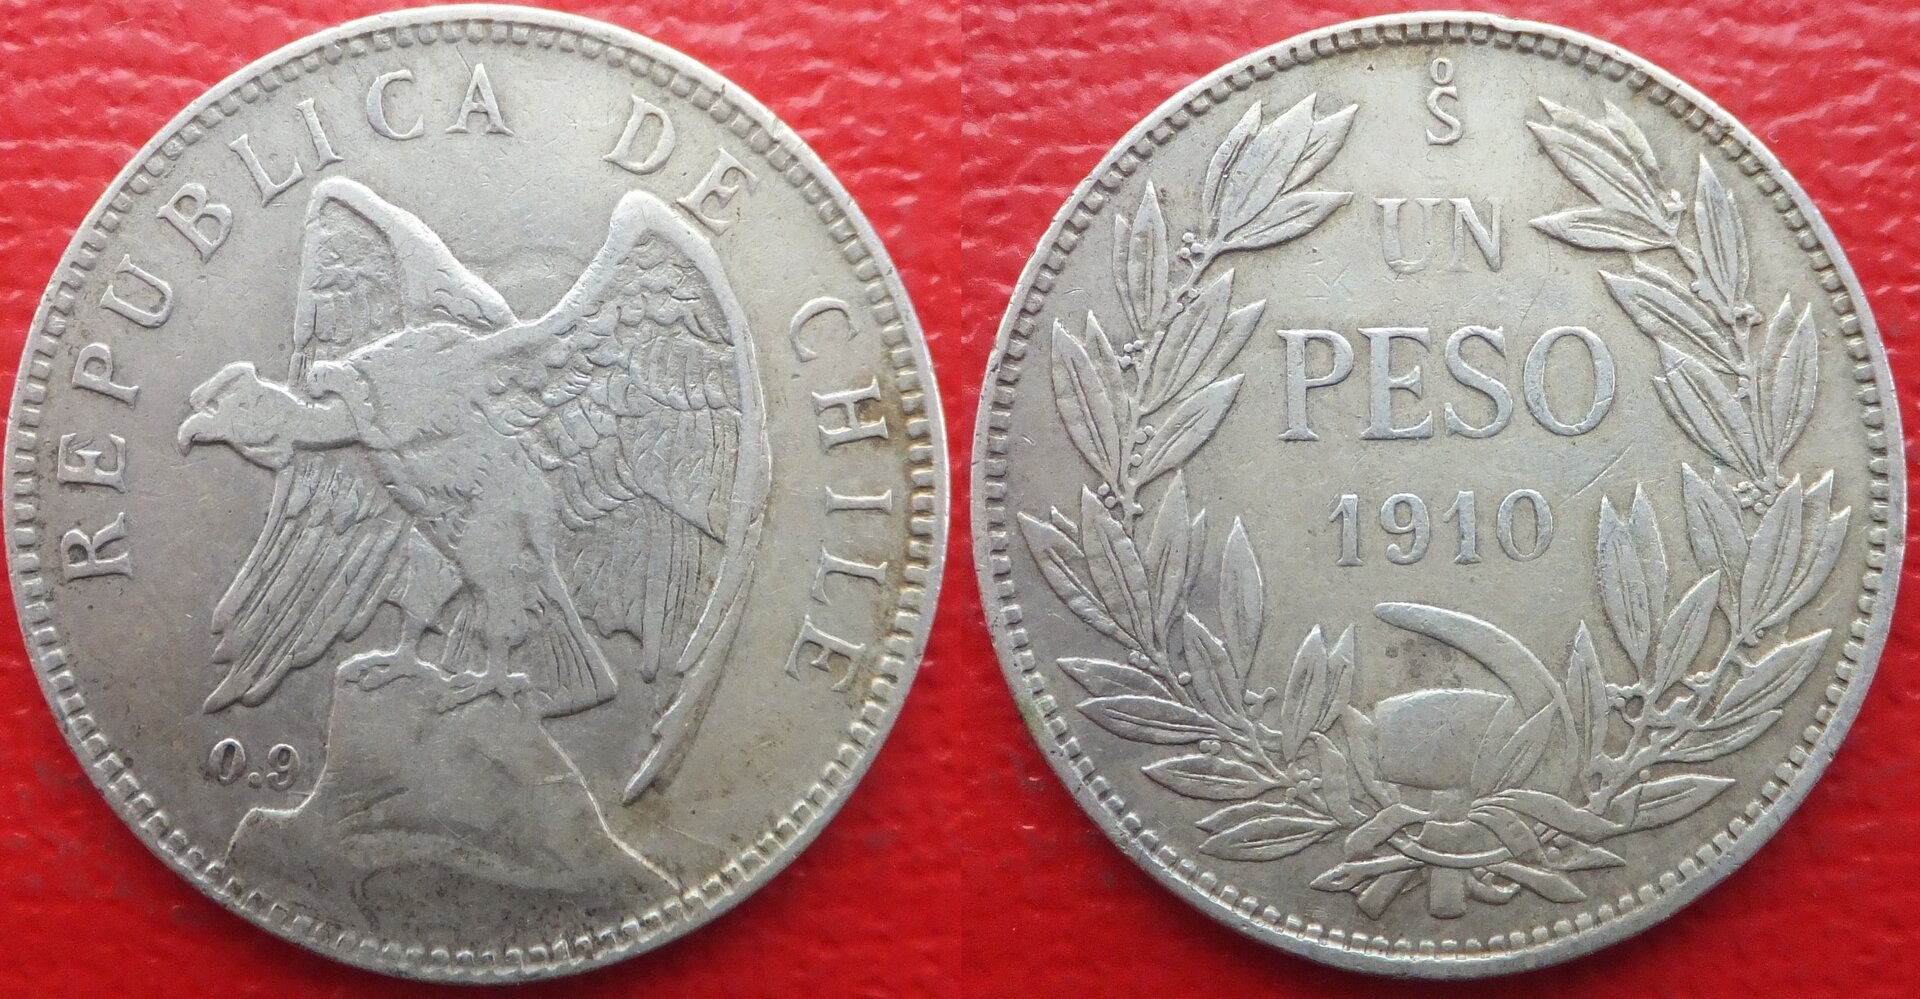 Chile 1 peso 1910 (3).jpg